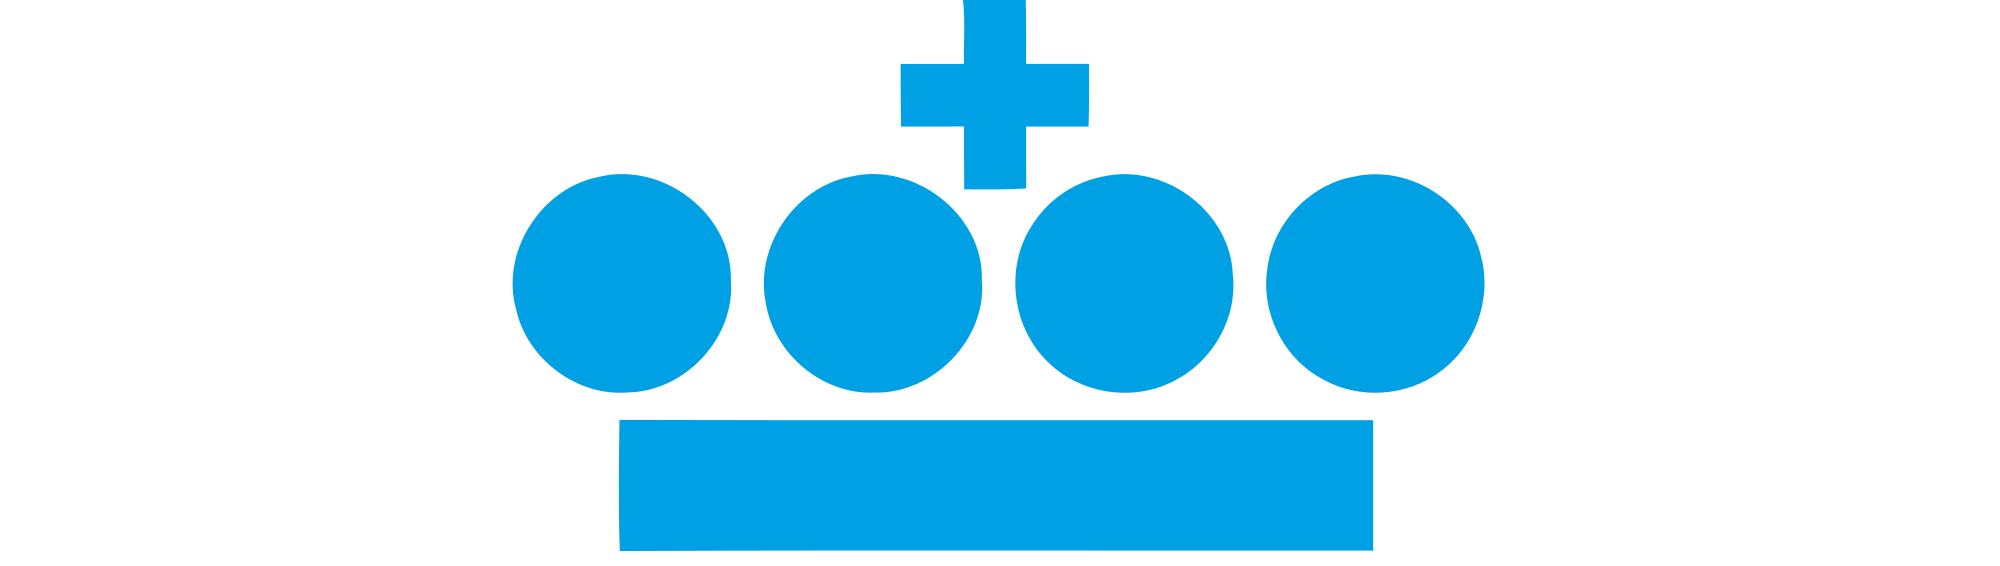 Blue Cross with Crown Logo - KLM crown logo.svg